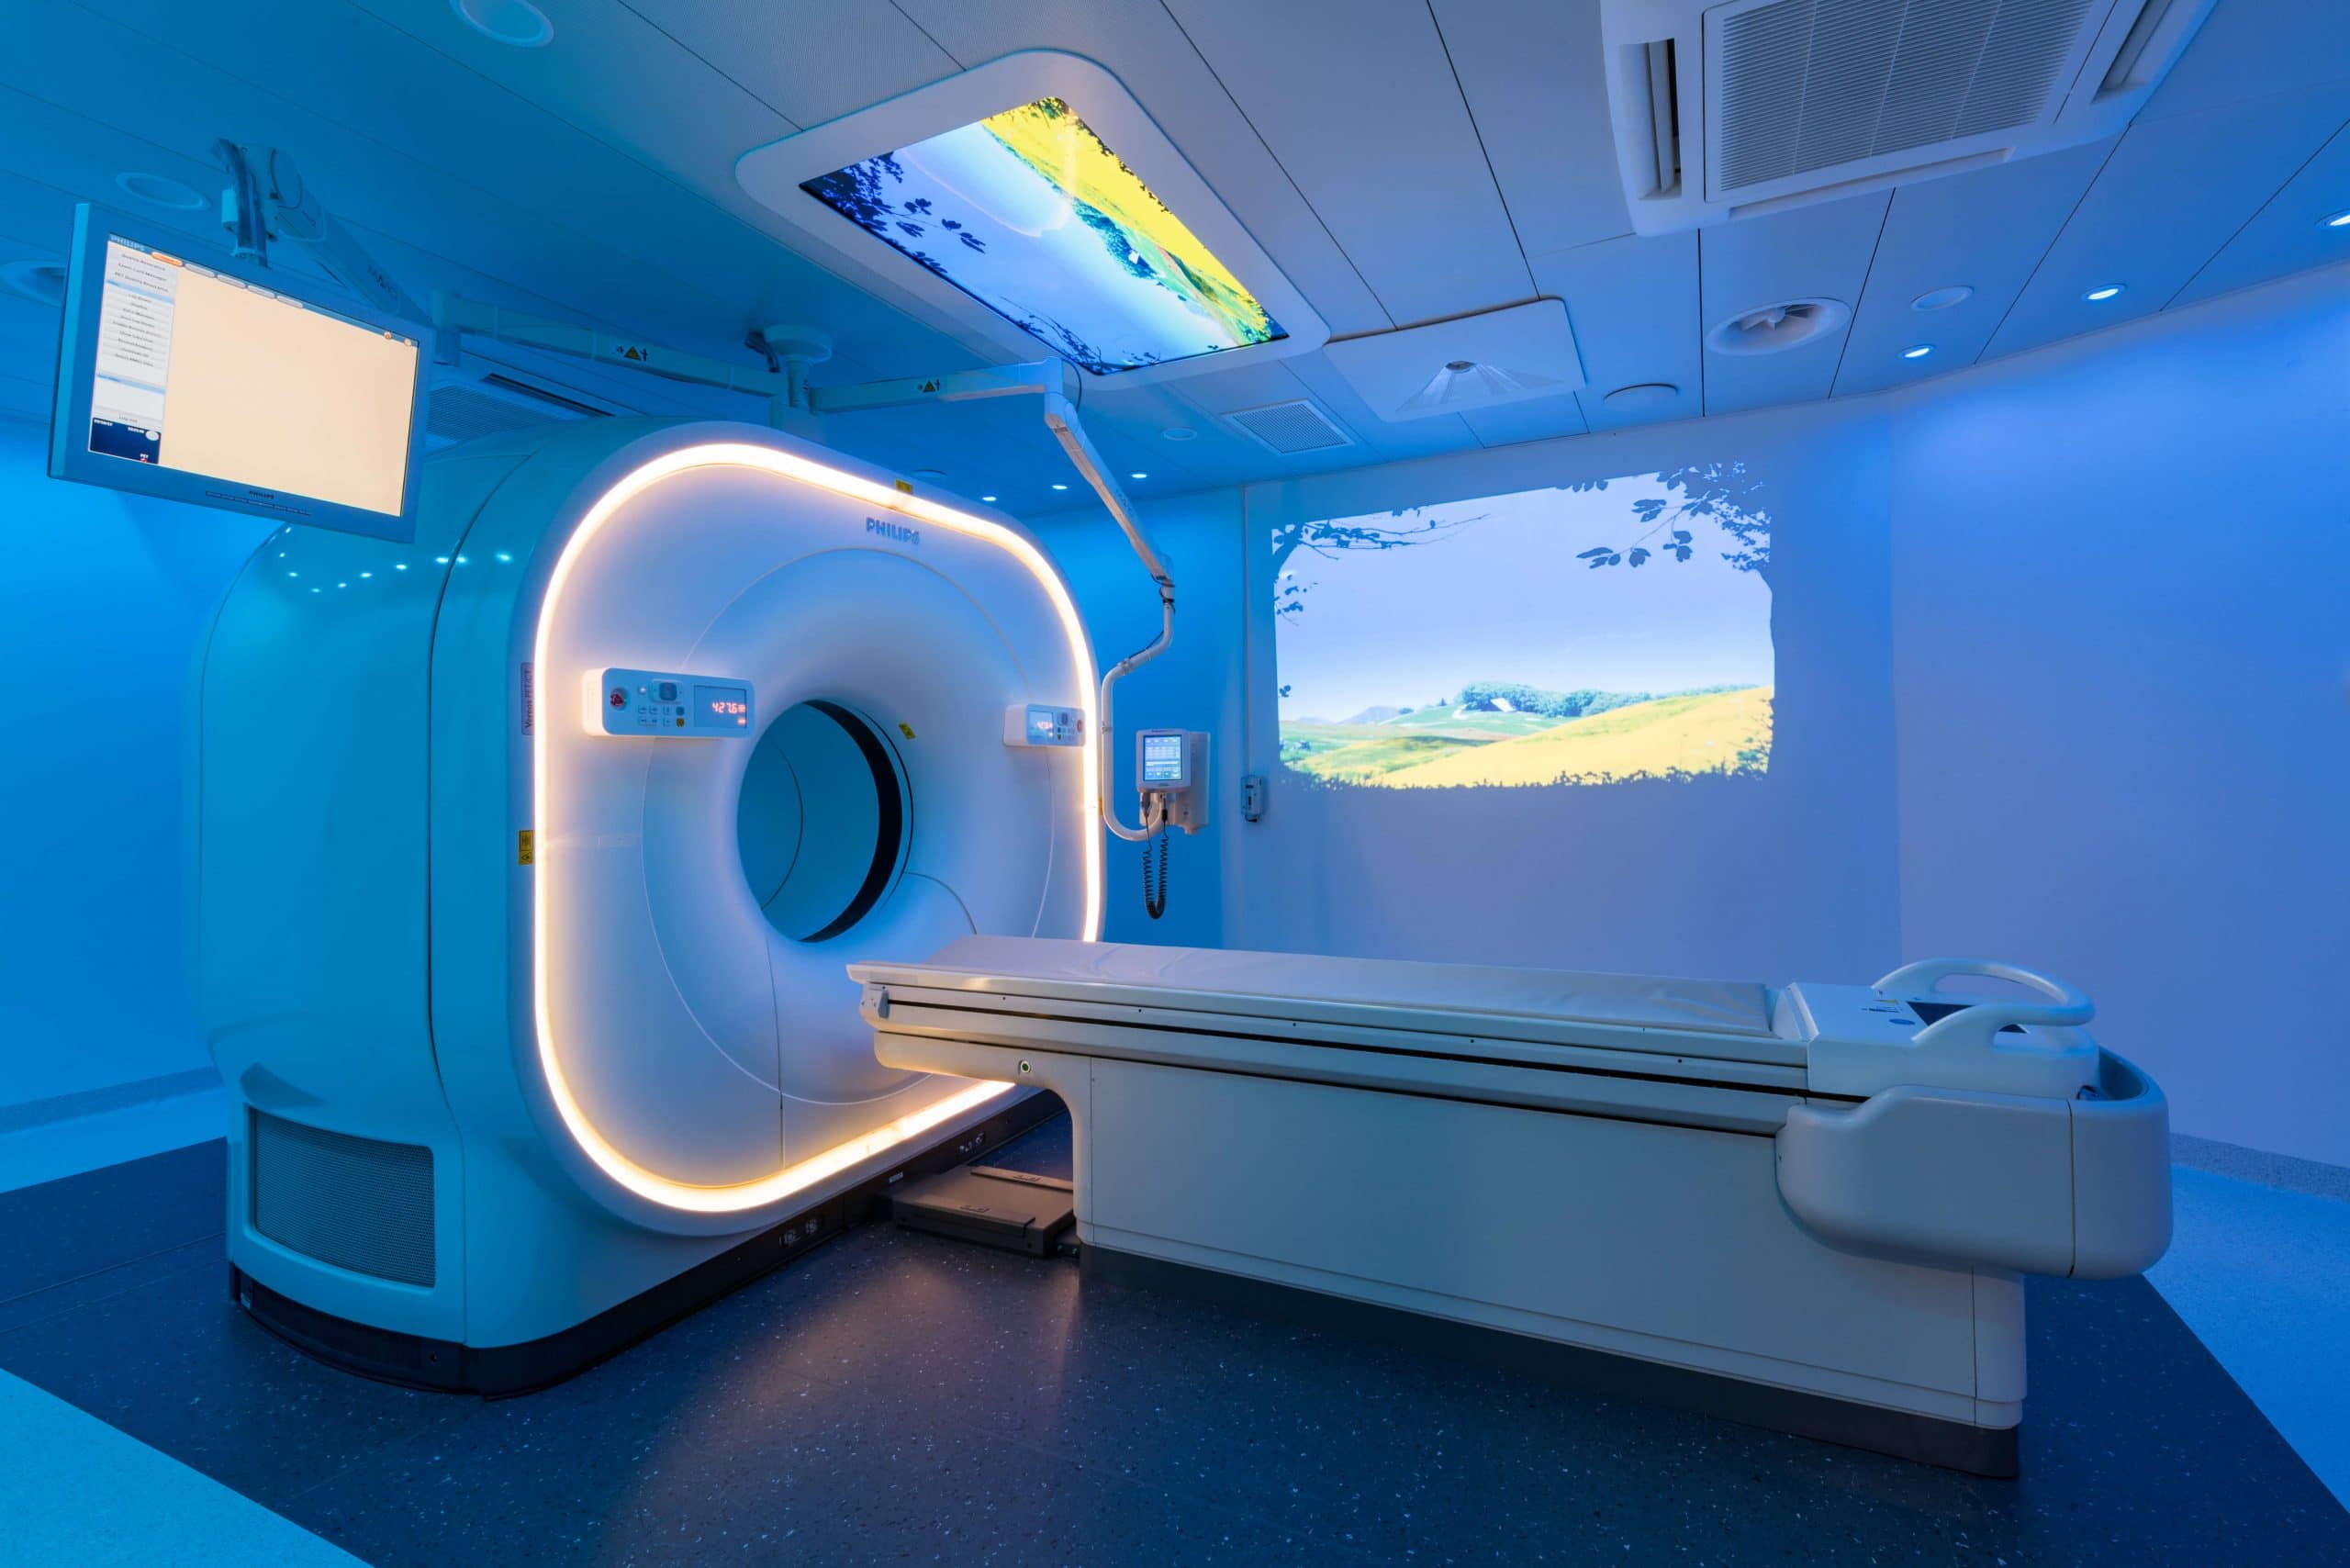 Novi PET-CT uređaj